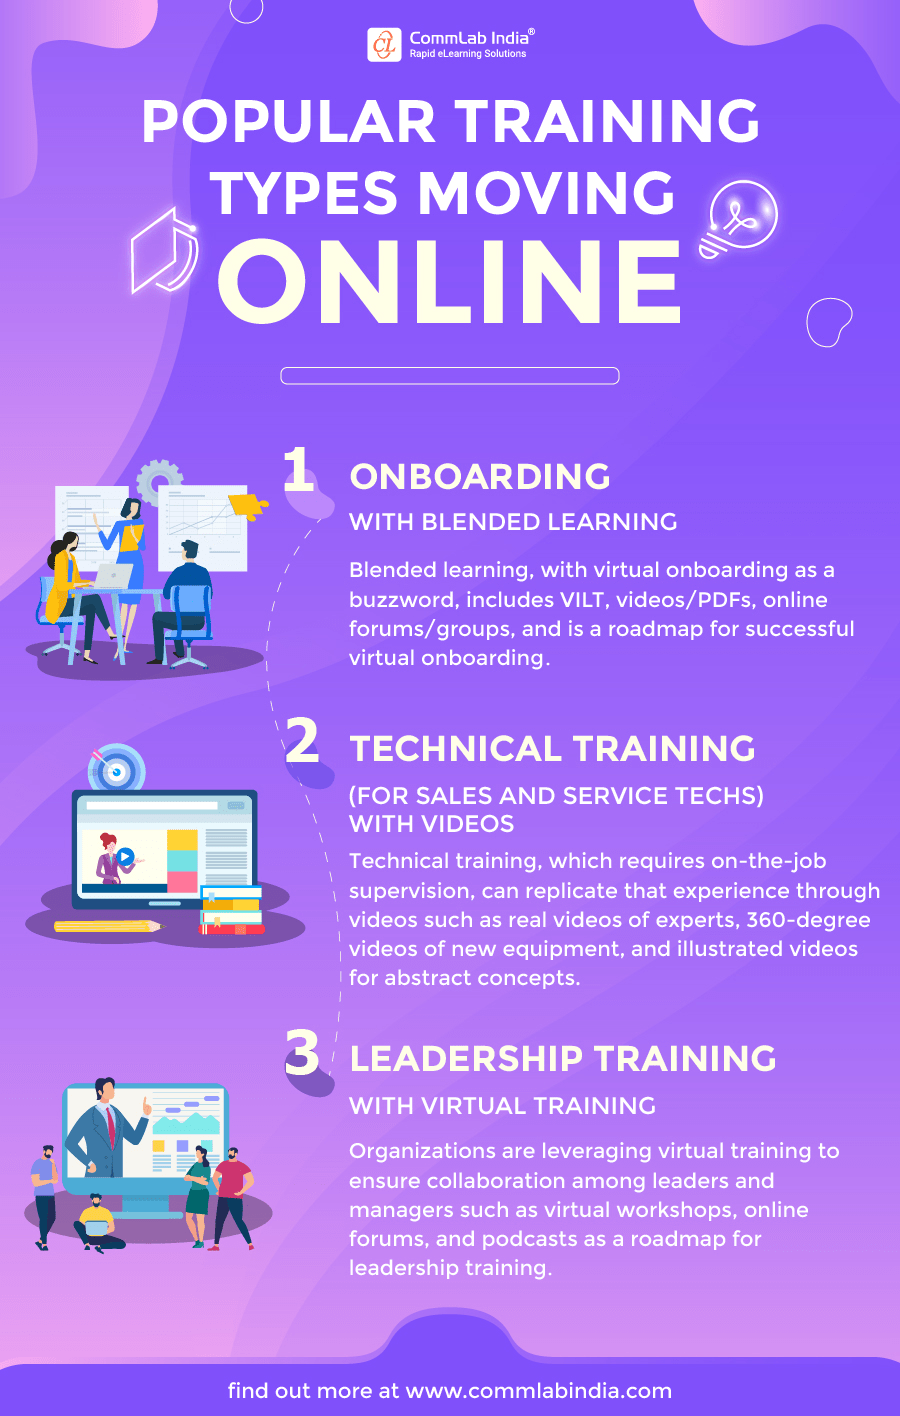 Online Training - Popular Training Types Moving Online